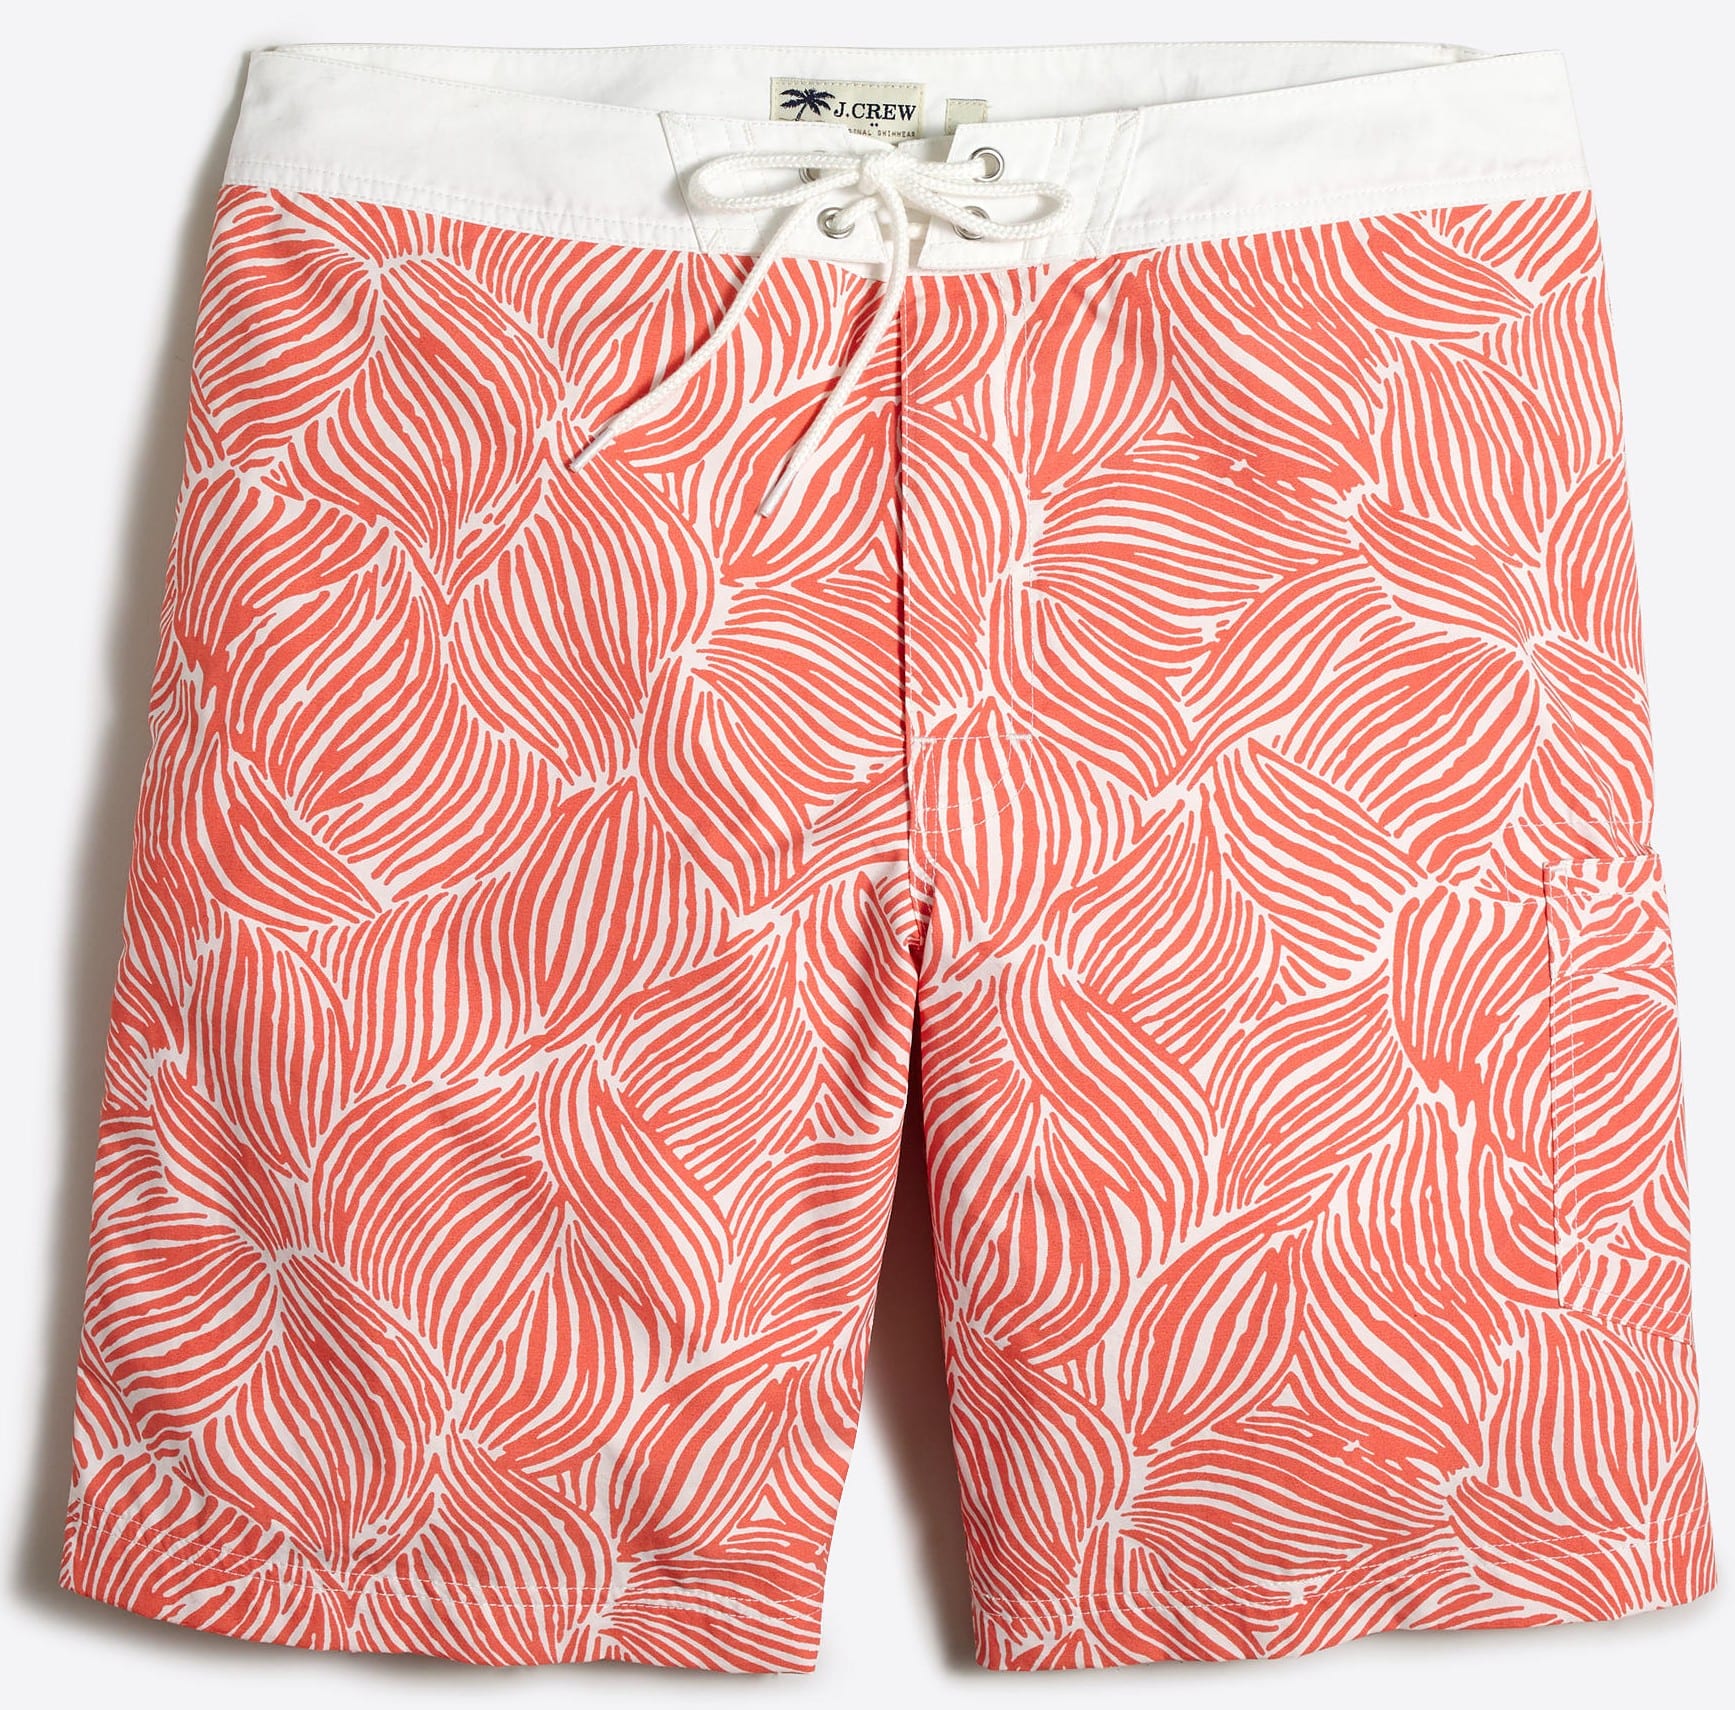 jcrew-coral-bathing-suit-for-men-2017-swim-trunks-2018